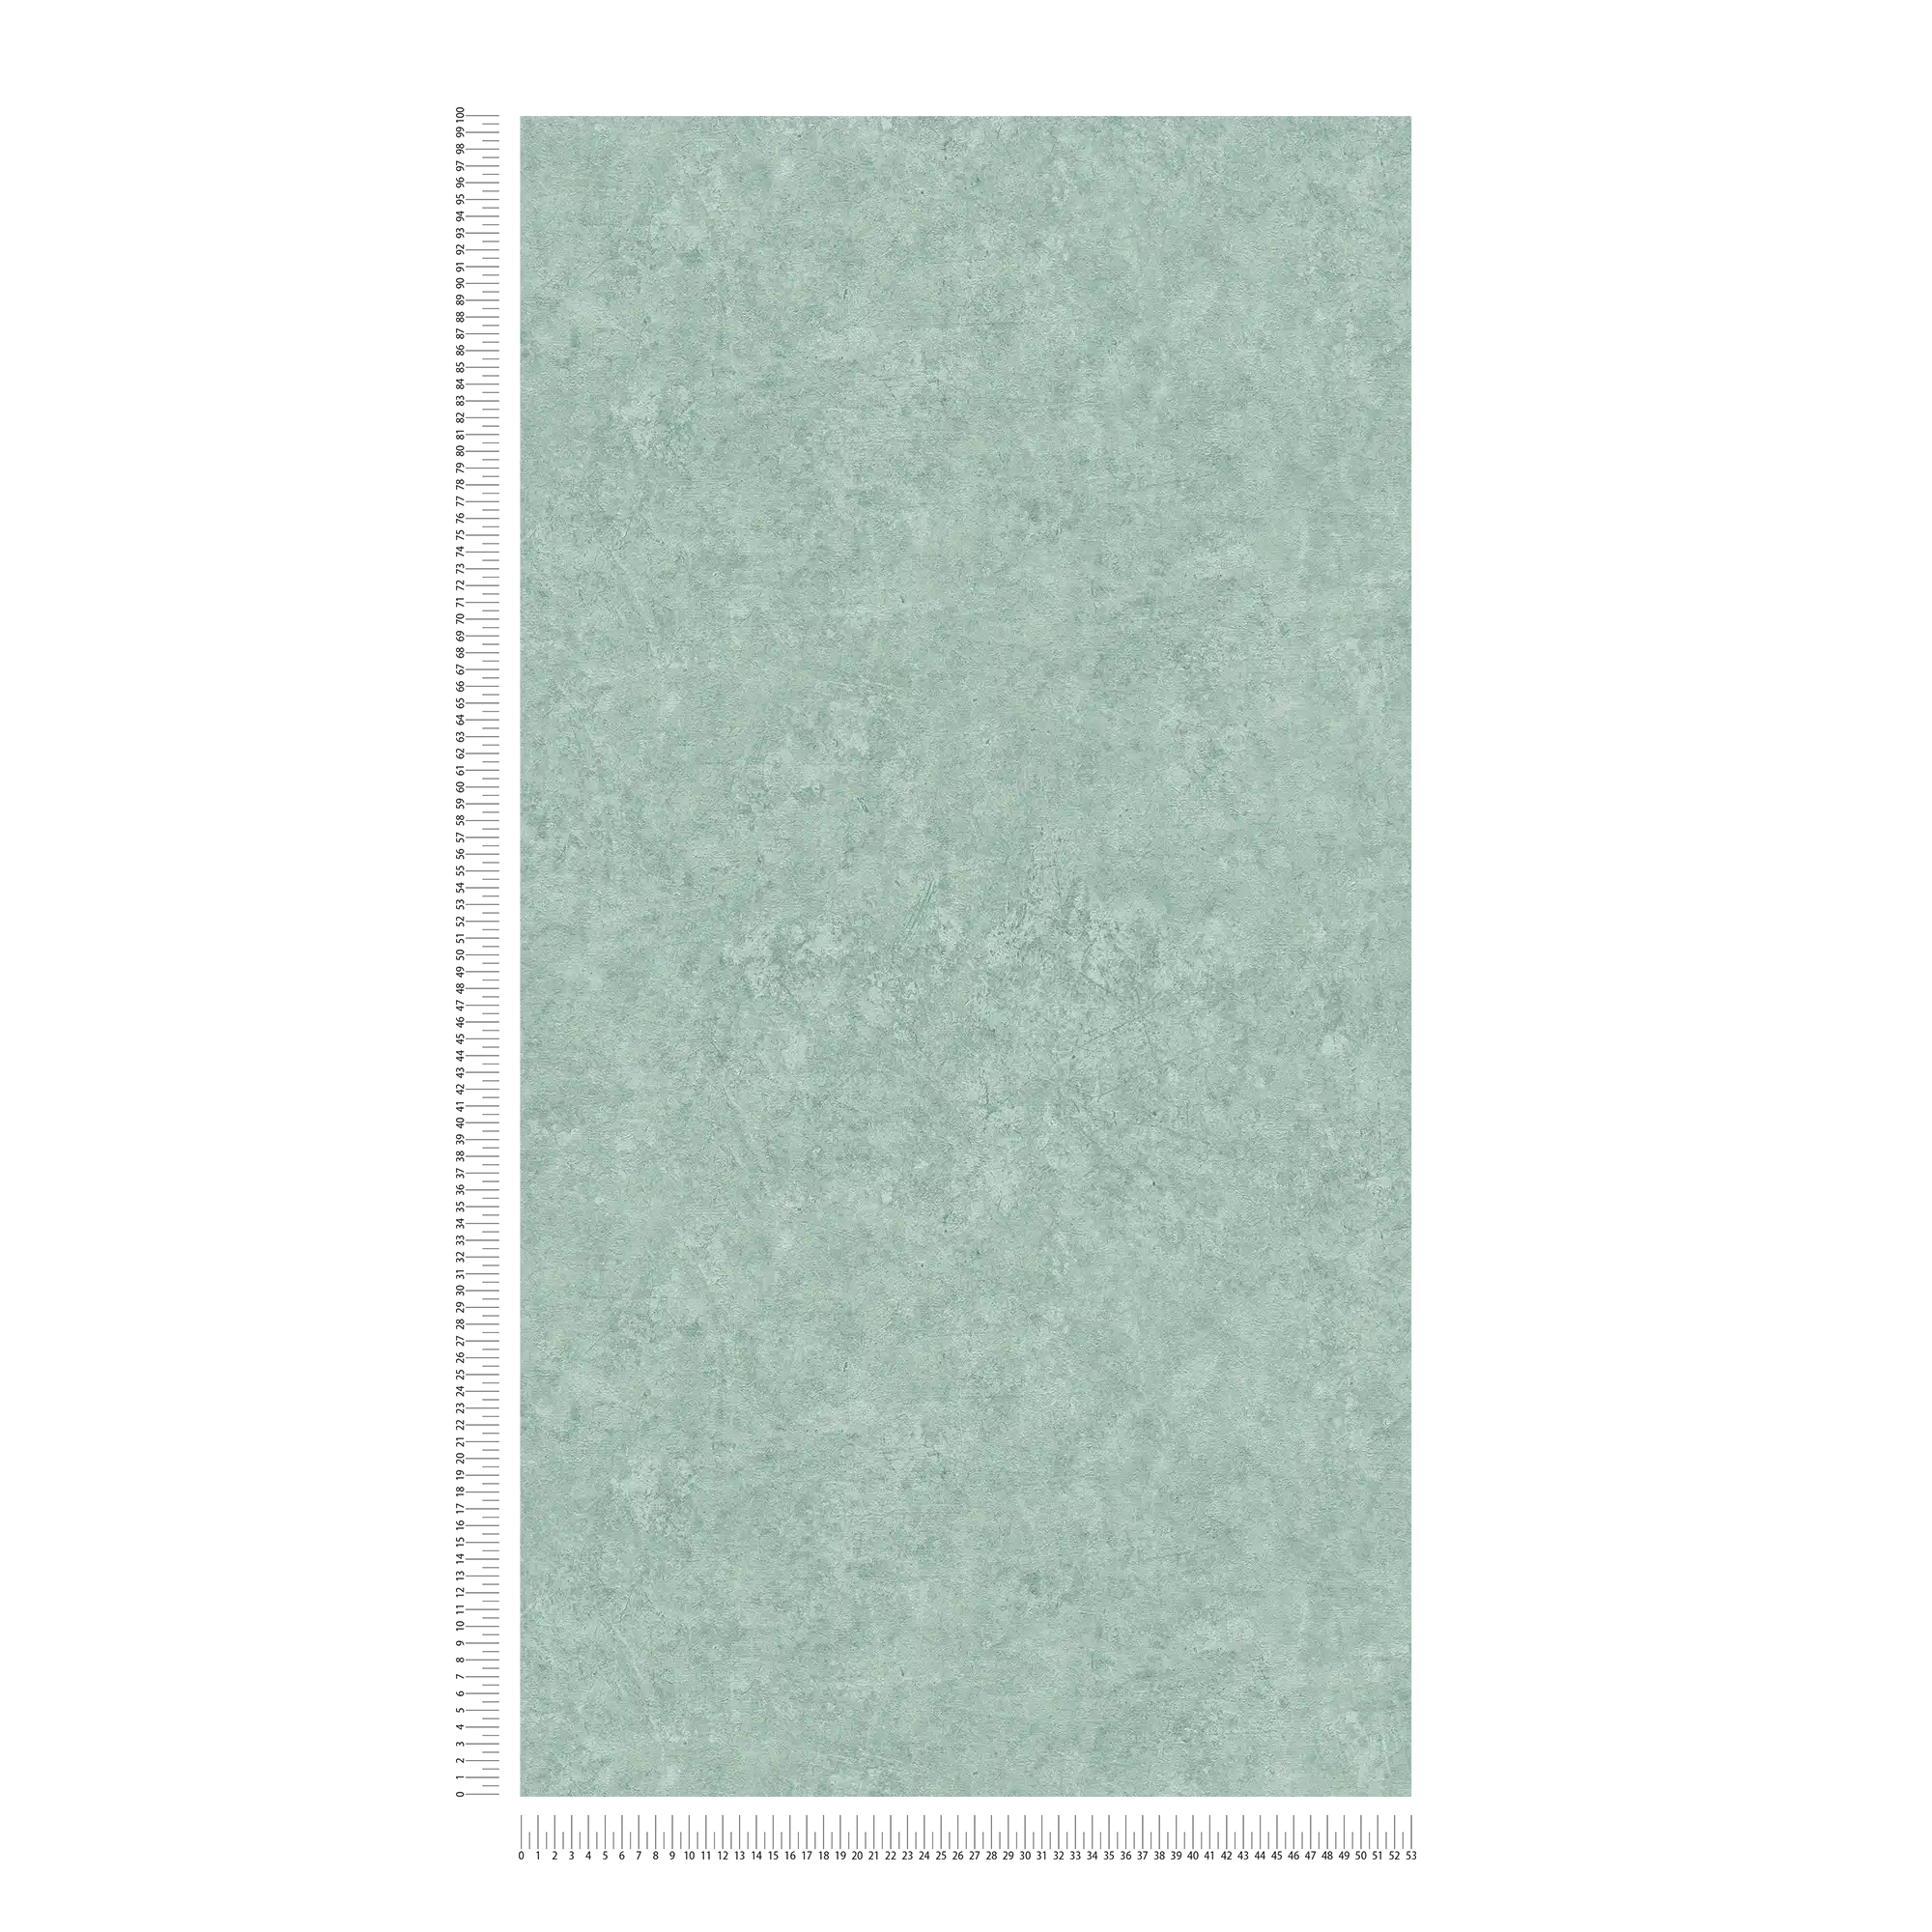             Papel pintado tejido-no tejido texturado liso - verde
        